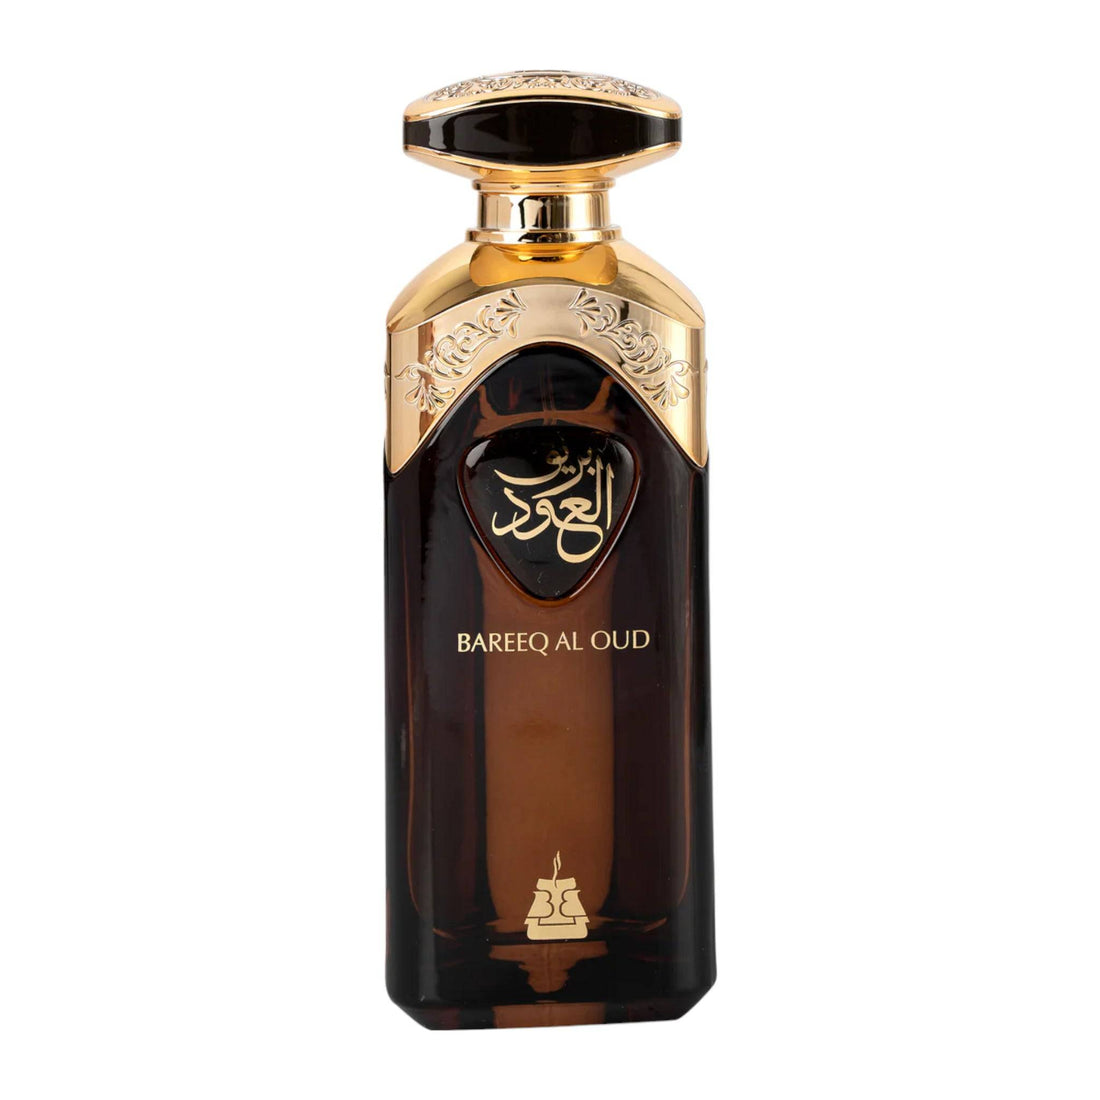 Sophisticated 100ml bottle of Bait Al Bakhoor Bareeq Al Oud Eau De Parfum, representing the unisex appeal and elegant essence of the fragrance.